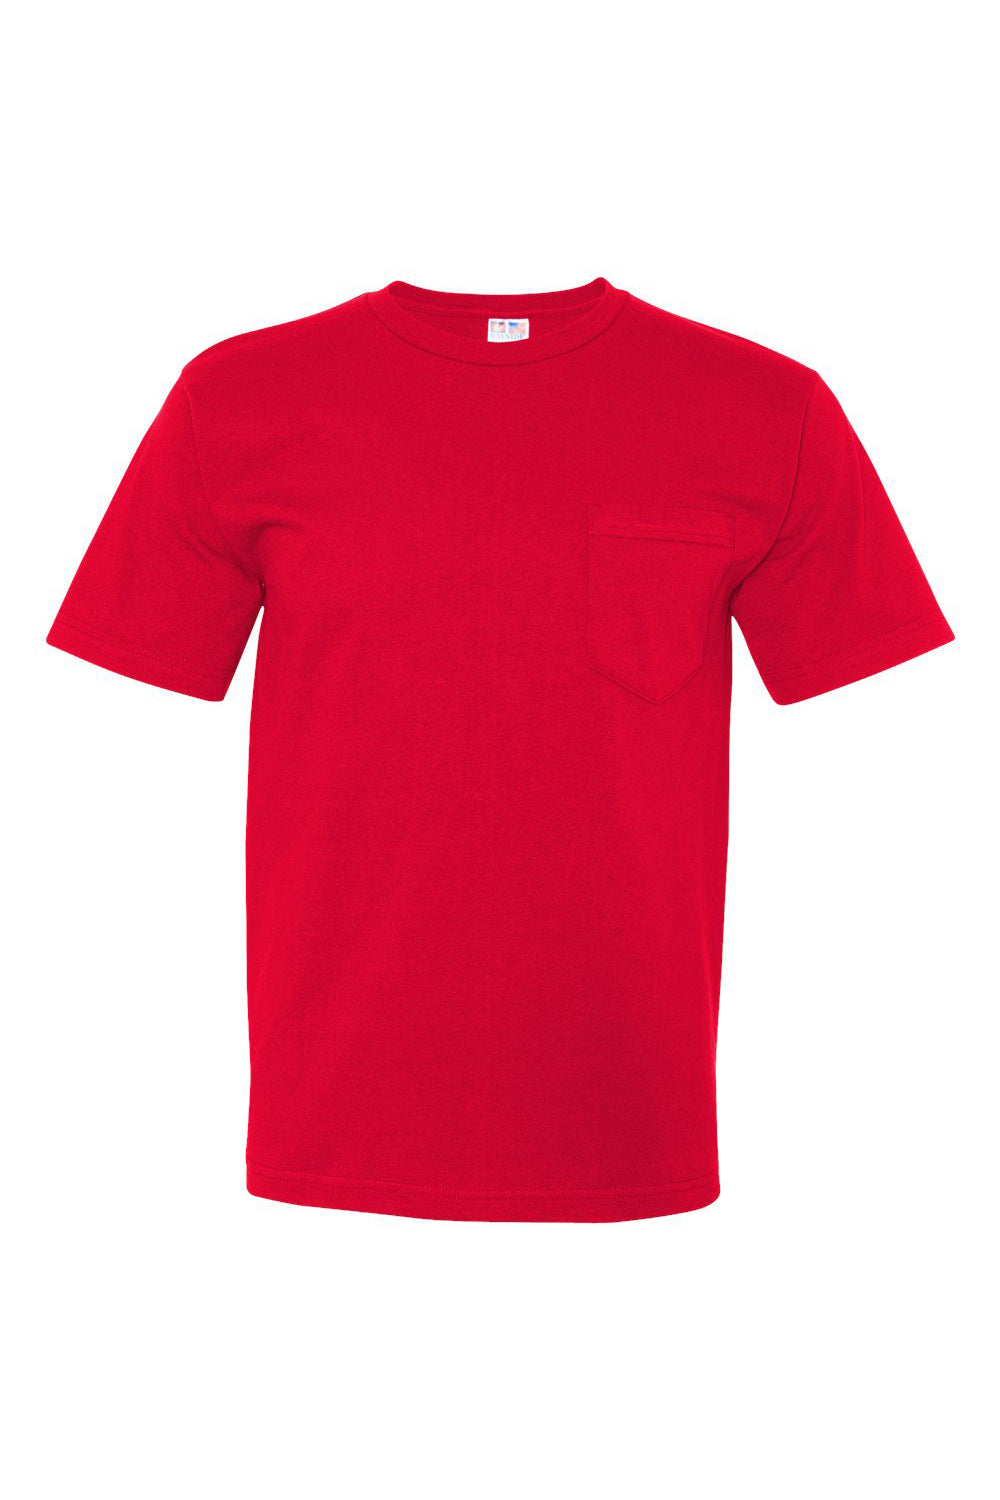 Bayside BA5070 Mens USA Made Short Sleeve Crewneck T-Shirt w/ Pocket Red Flat Front